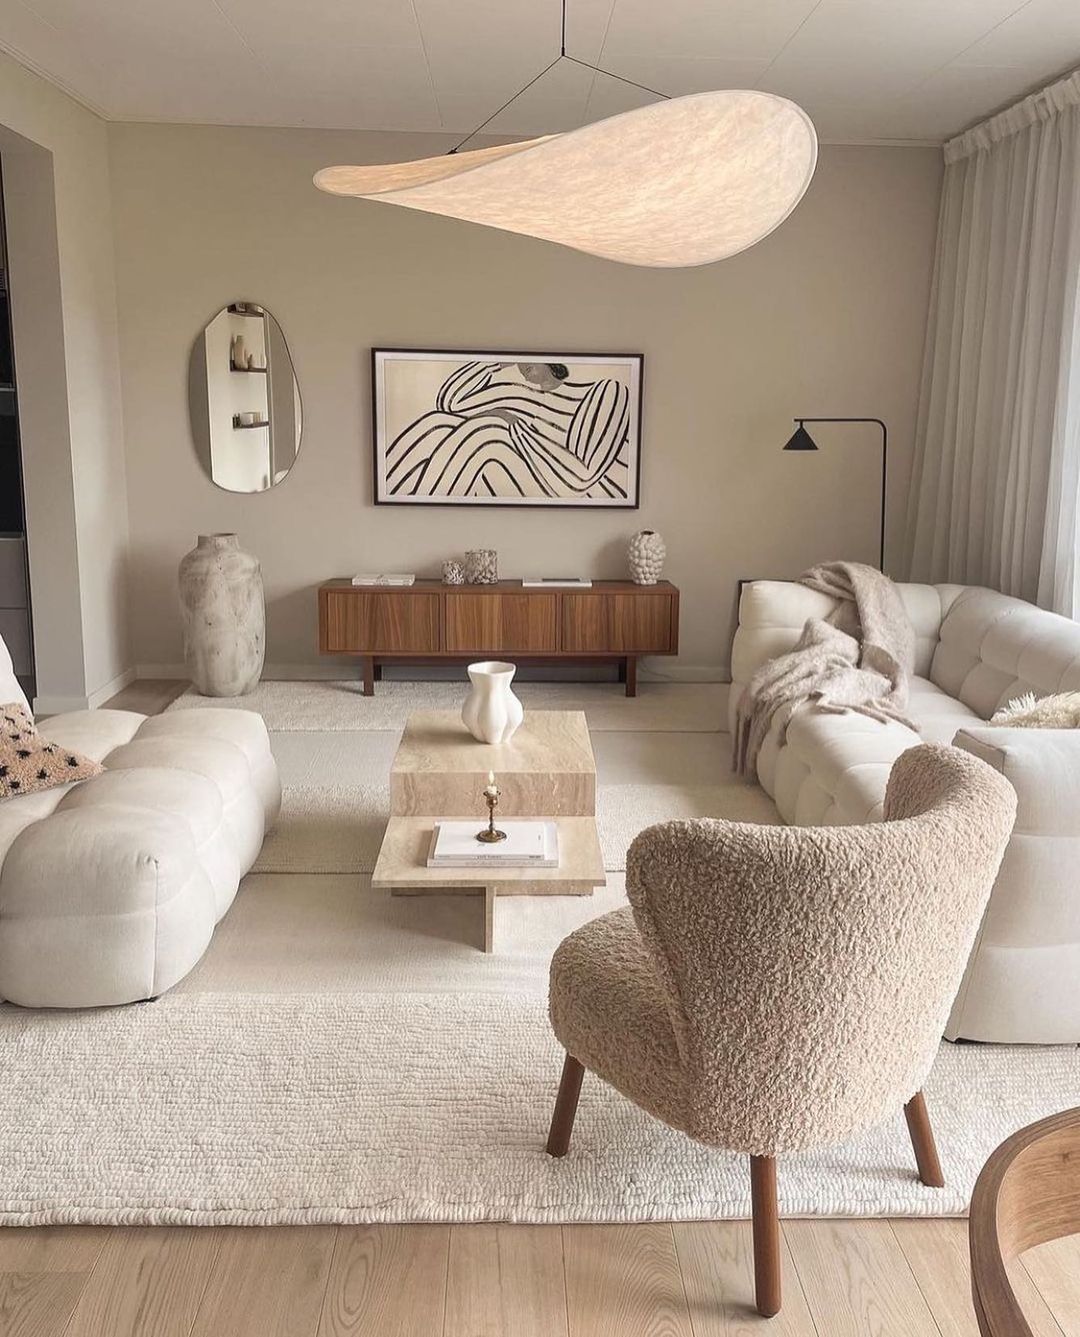 Modern Minimalist Living Room Create a Sleek and Simple Living Space with Minimalist Design